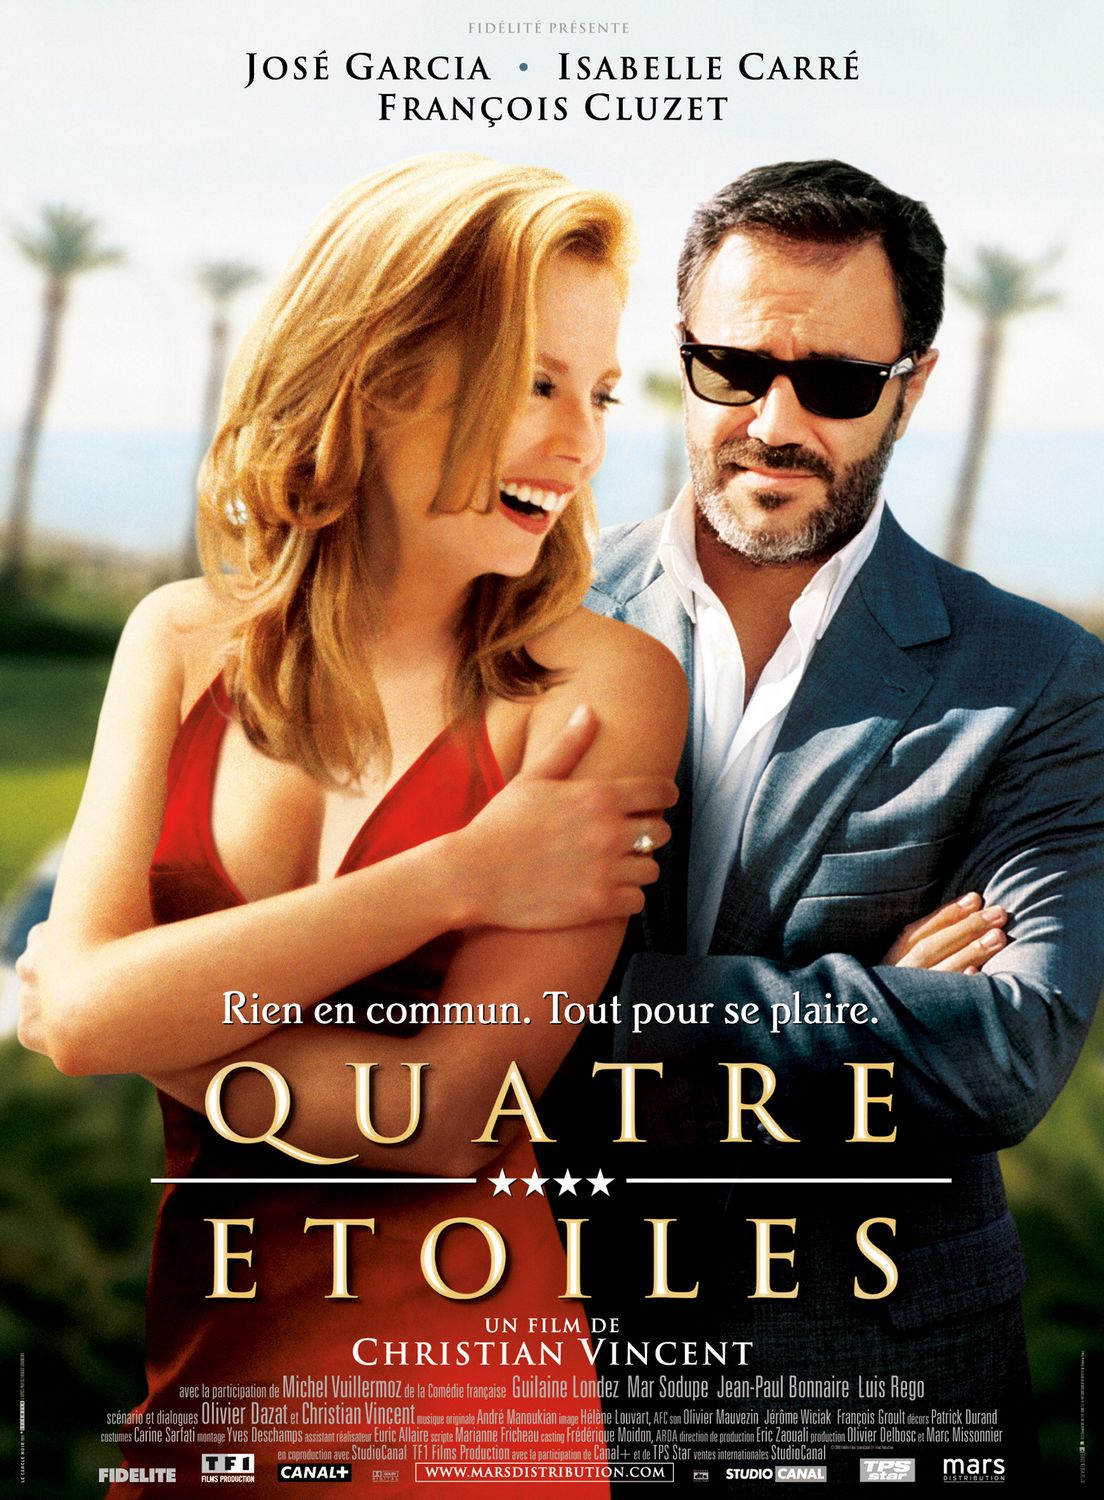 Extra Large Movie Poster Image for Quatre étoiles 